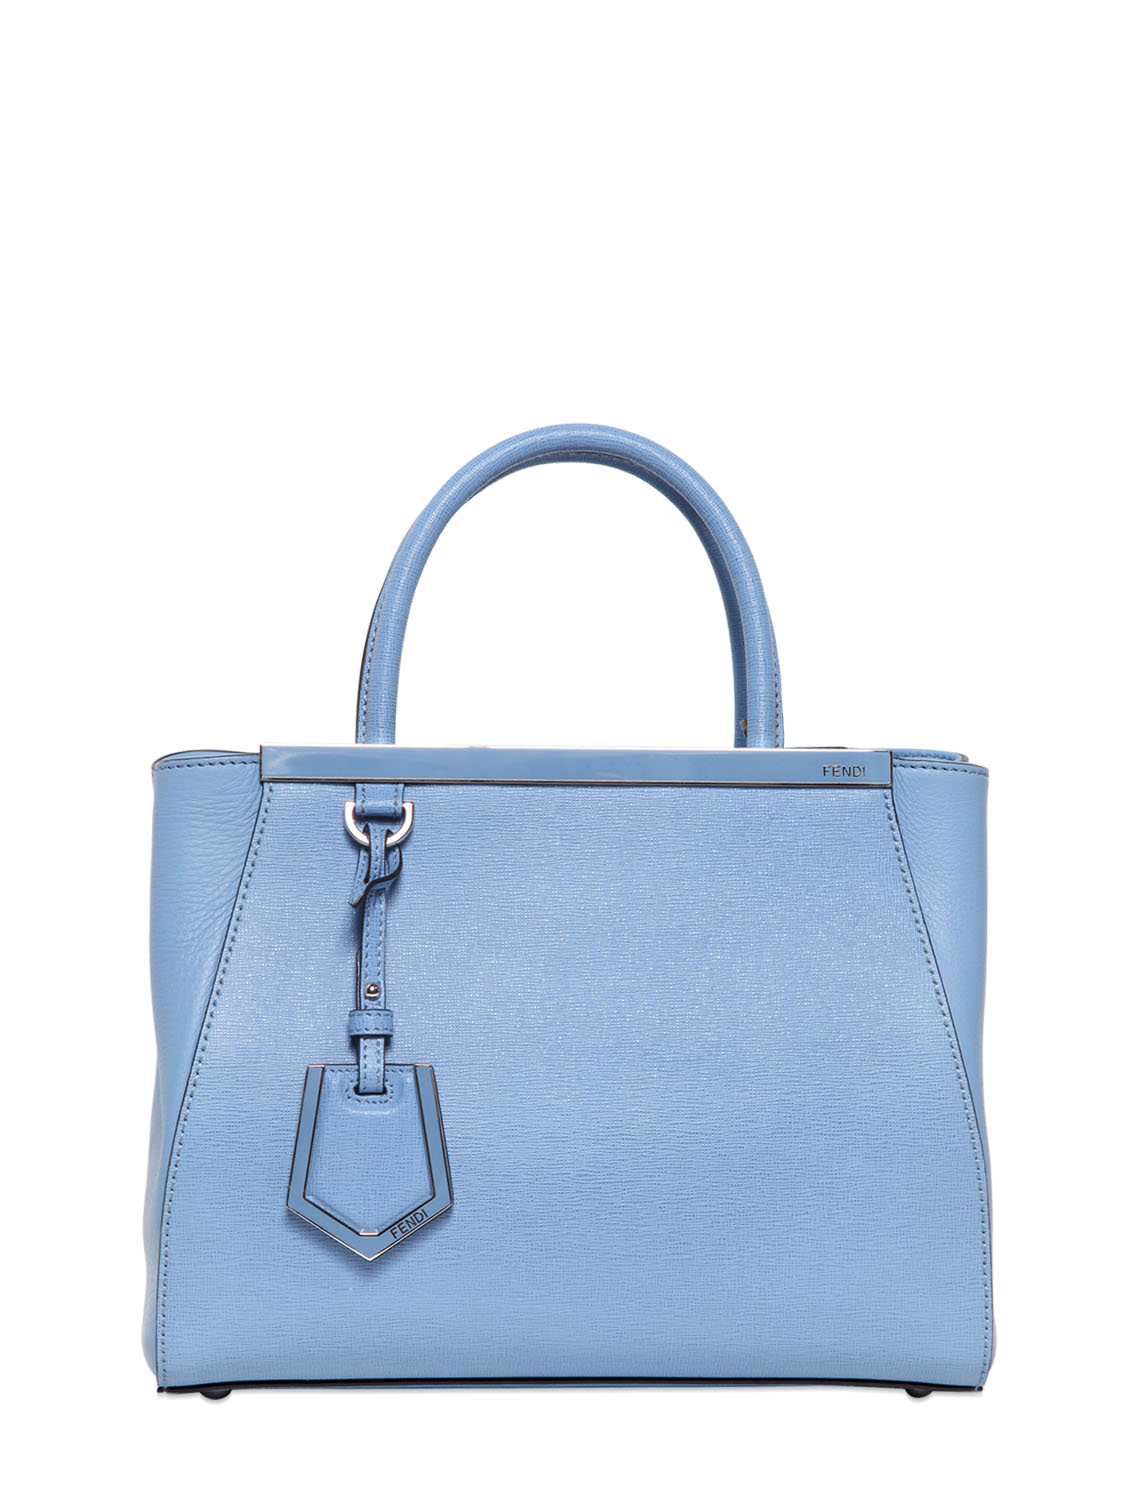 Fendi Mini 2 Jours Structured Leather Bag in Light Blue (Blue) - Lyst